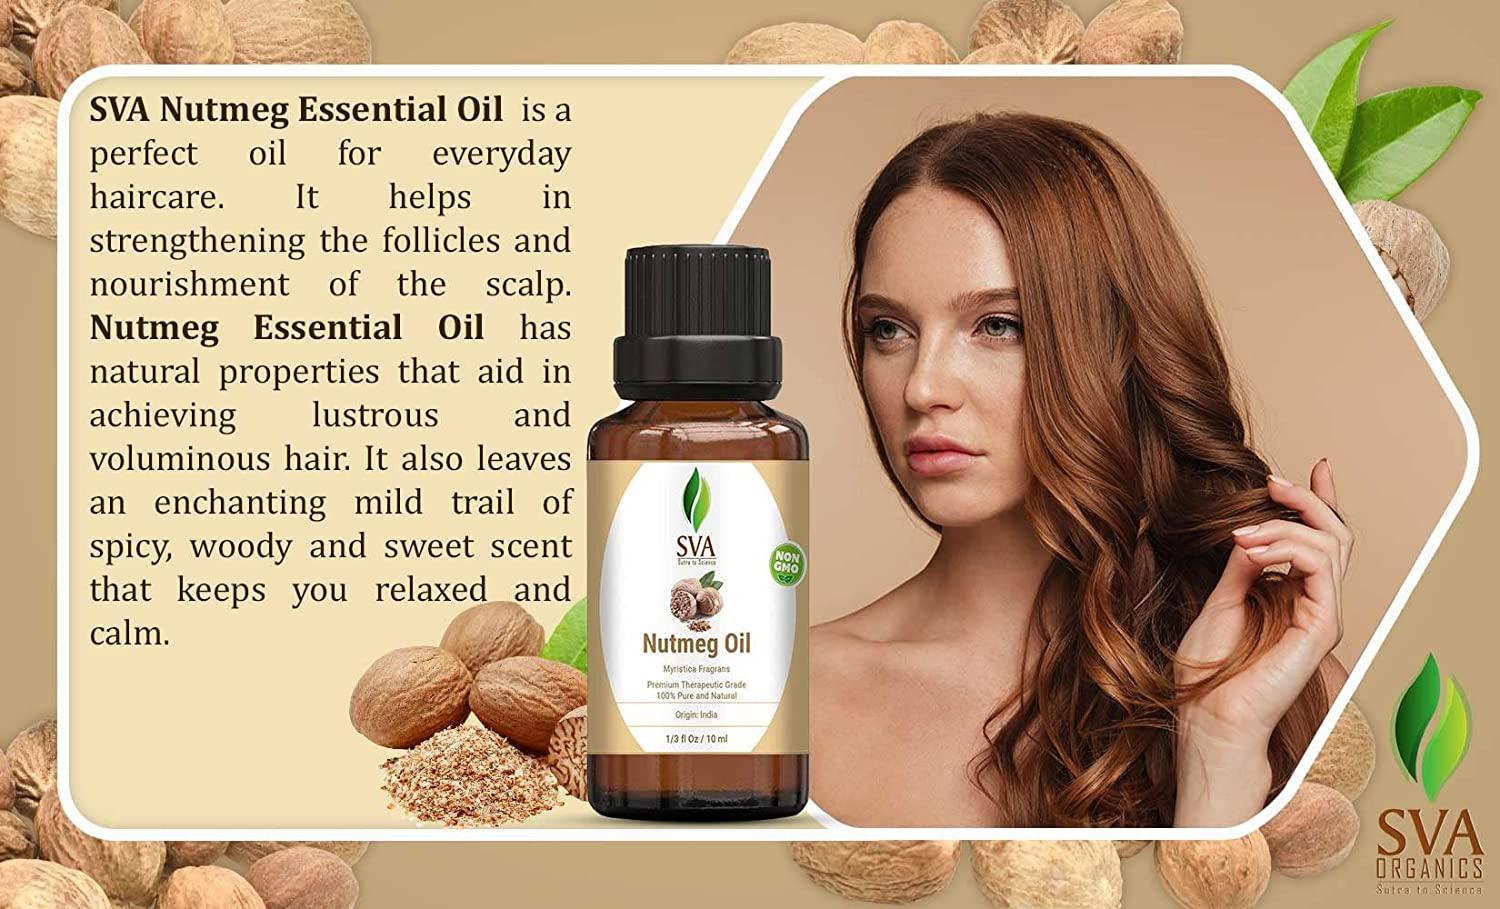 Nutmeg Essential Oil | Pure & Natural Therapeutic Grade | 10 ml